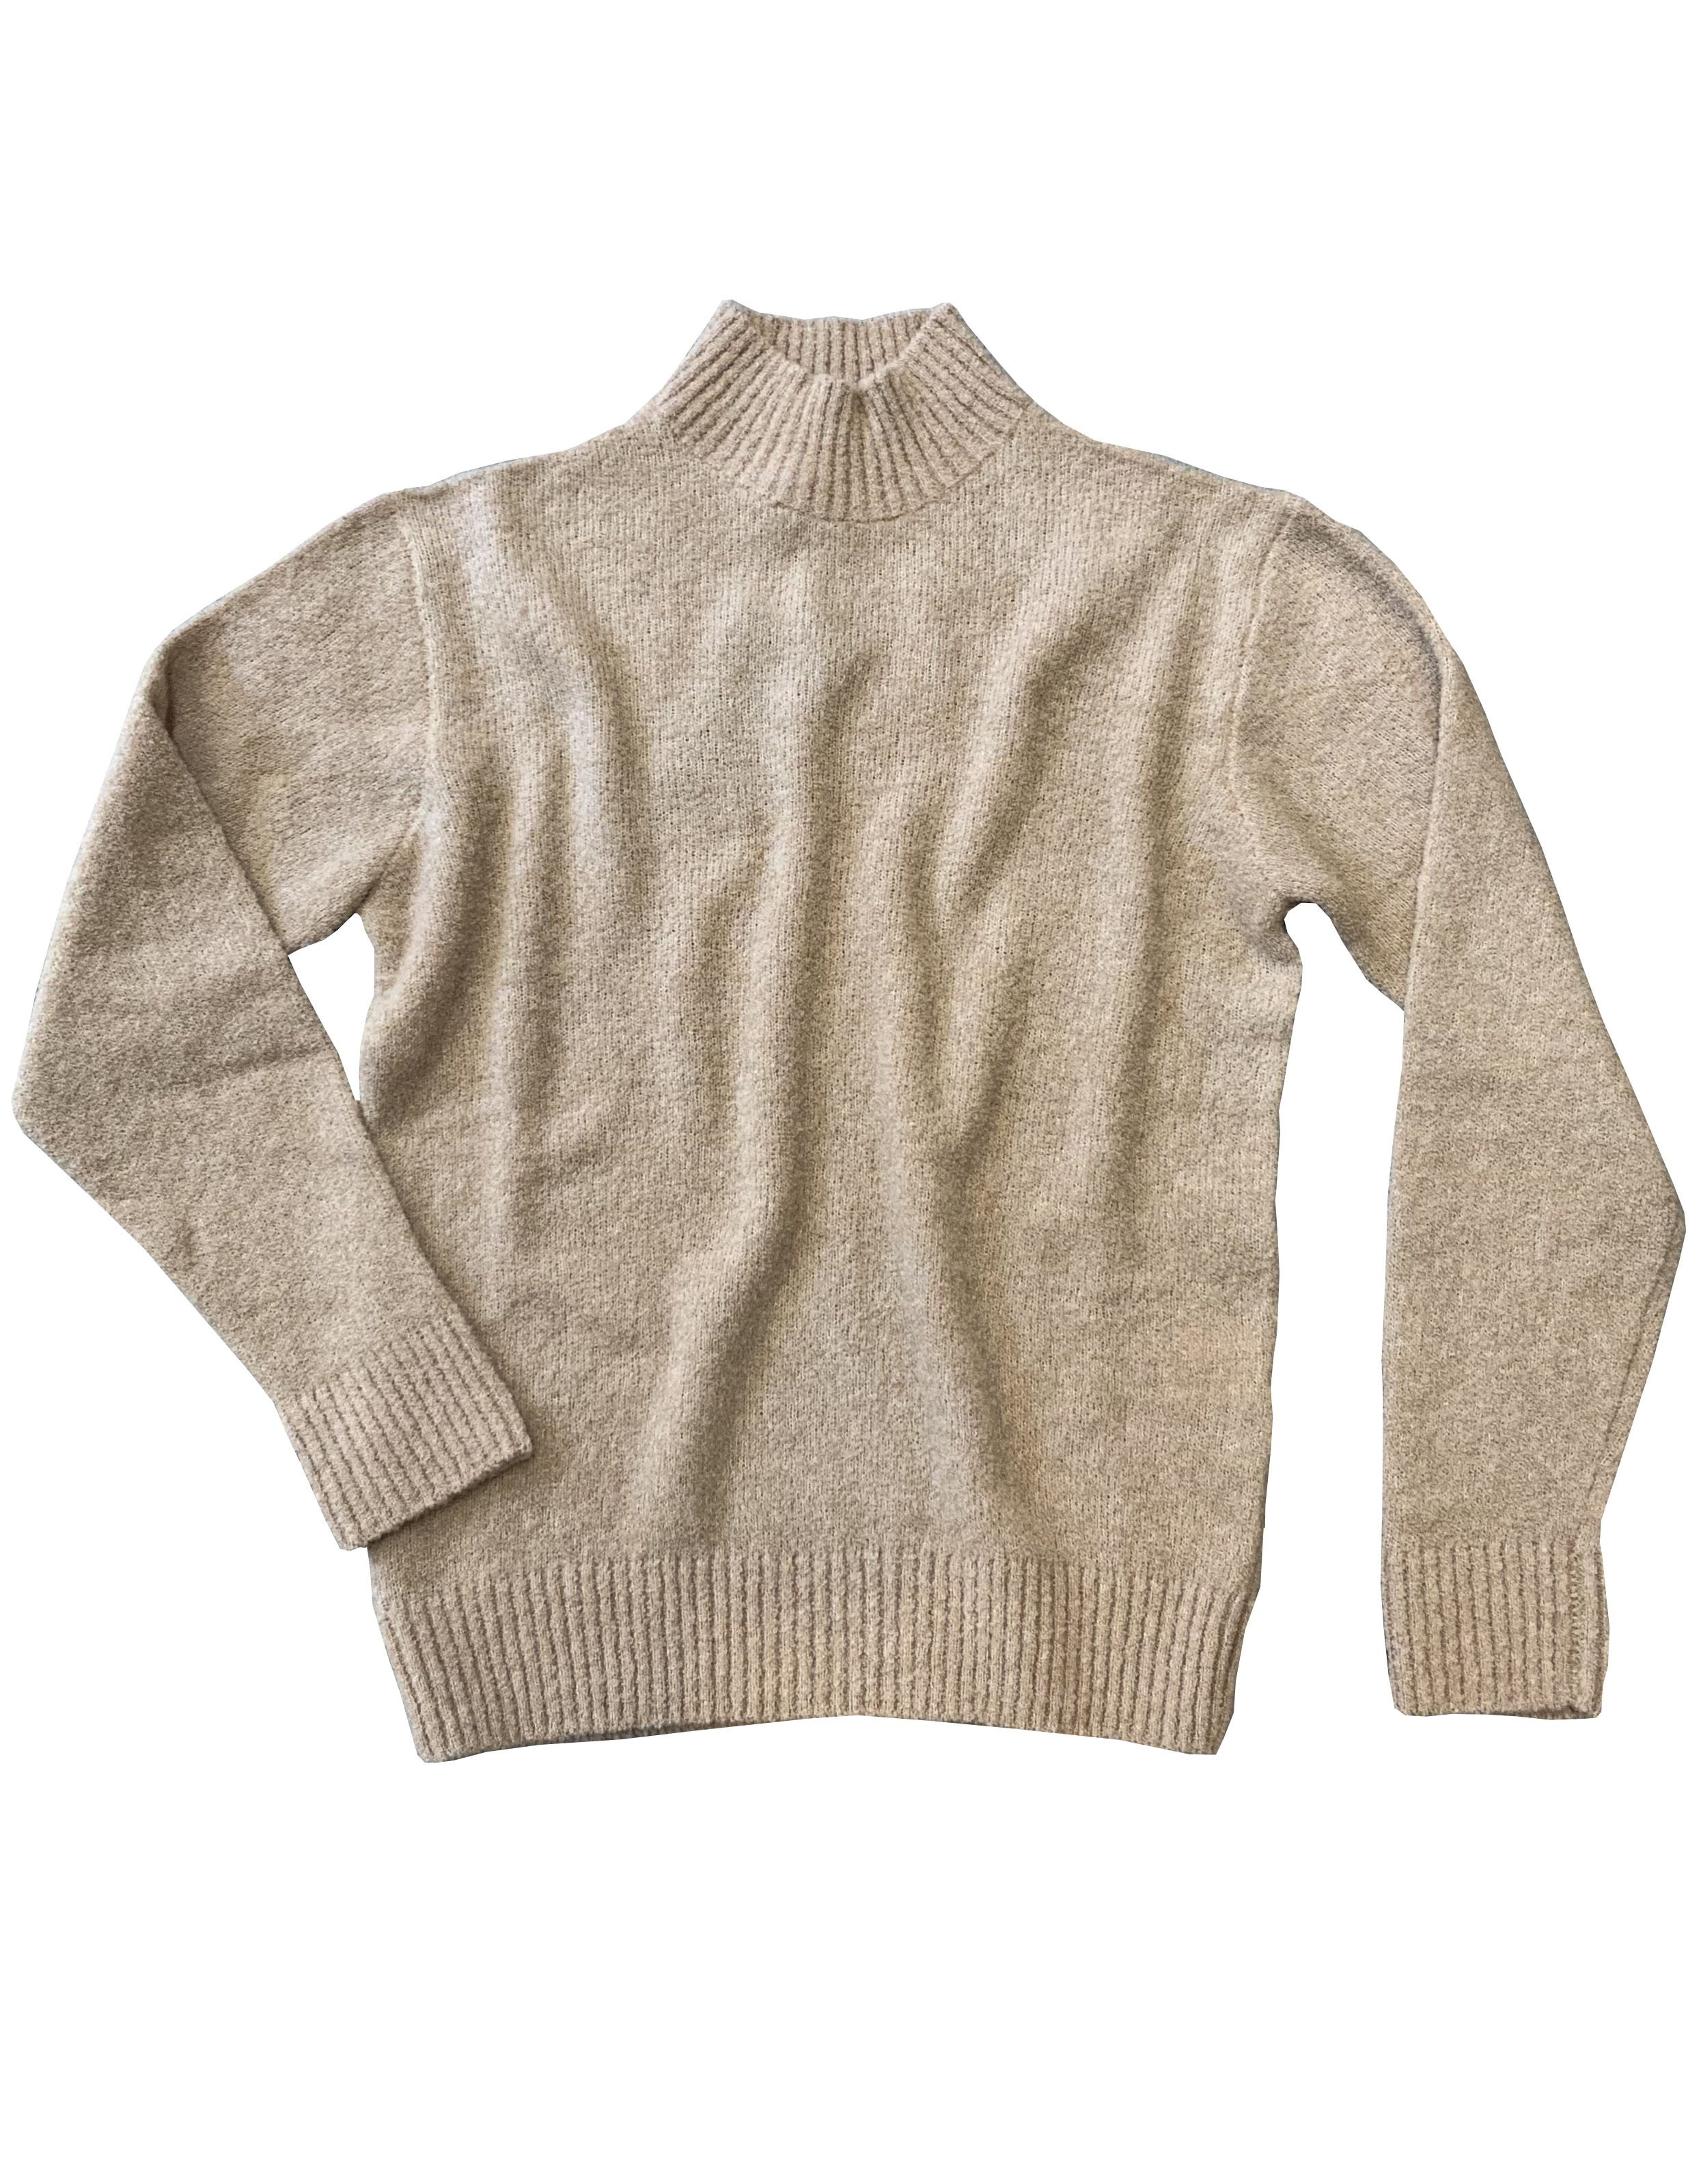 CIRCOLO 1901 - Dark Beige Turtle Neck Sweater in Wool Blend 'Boucle' Fabric CN3329